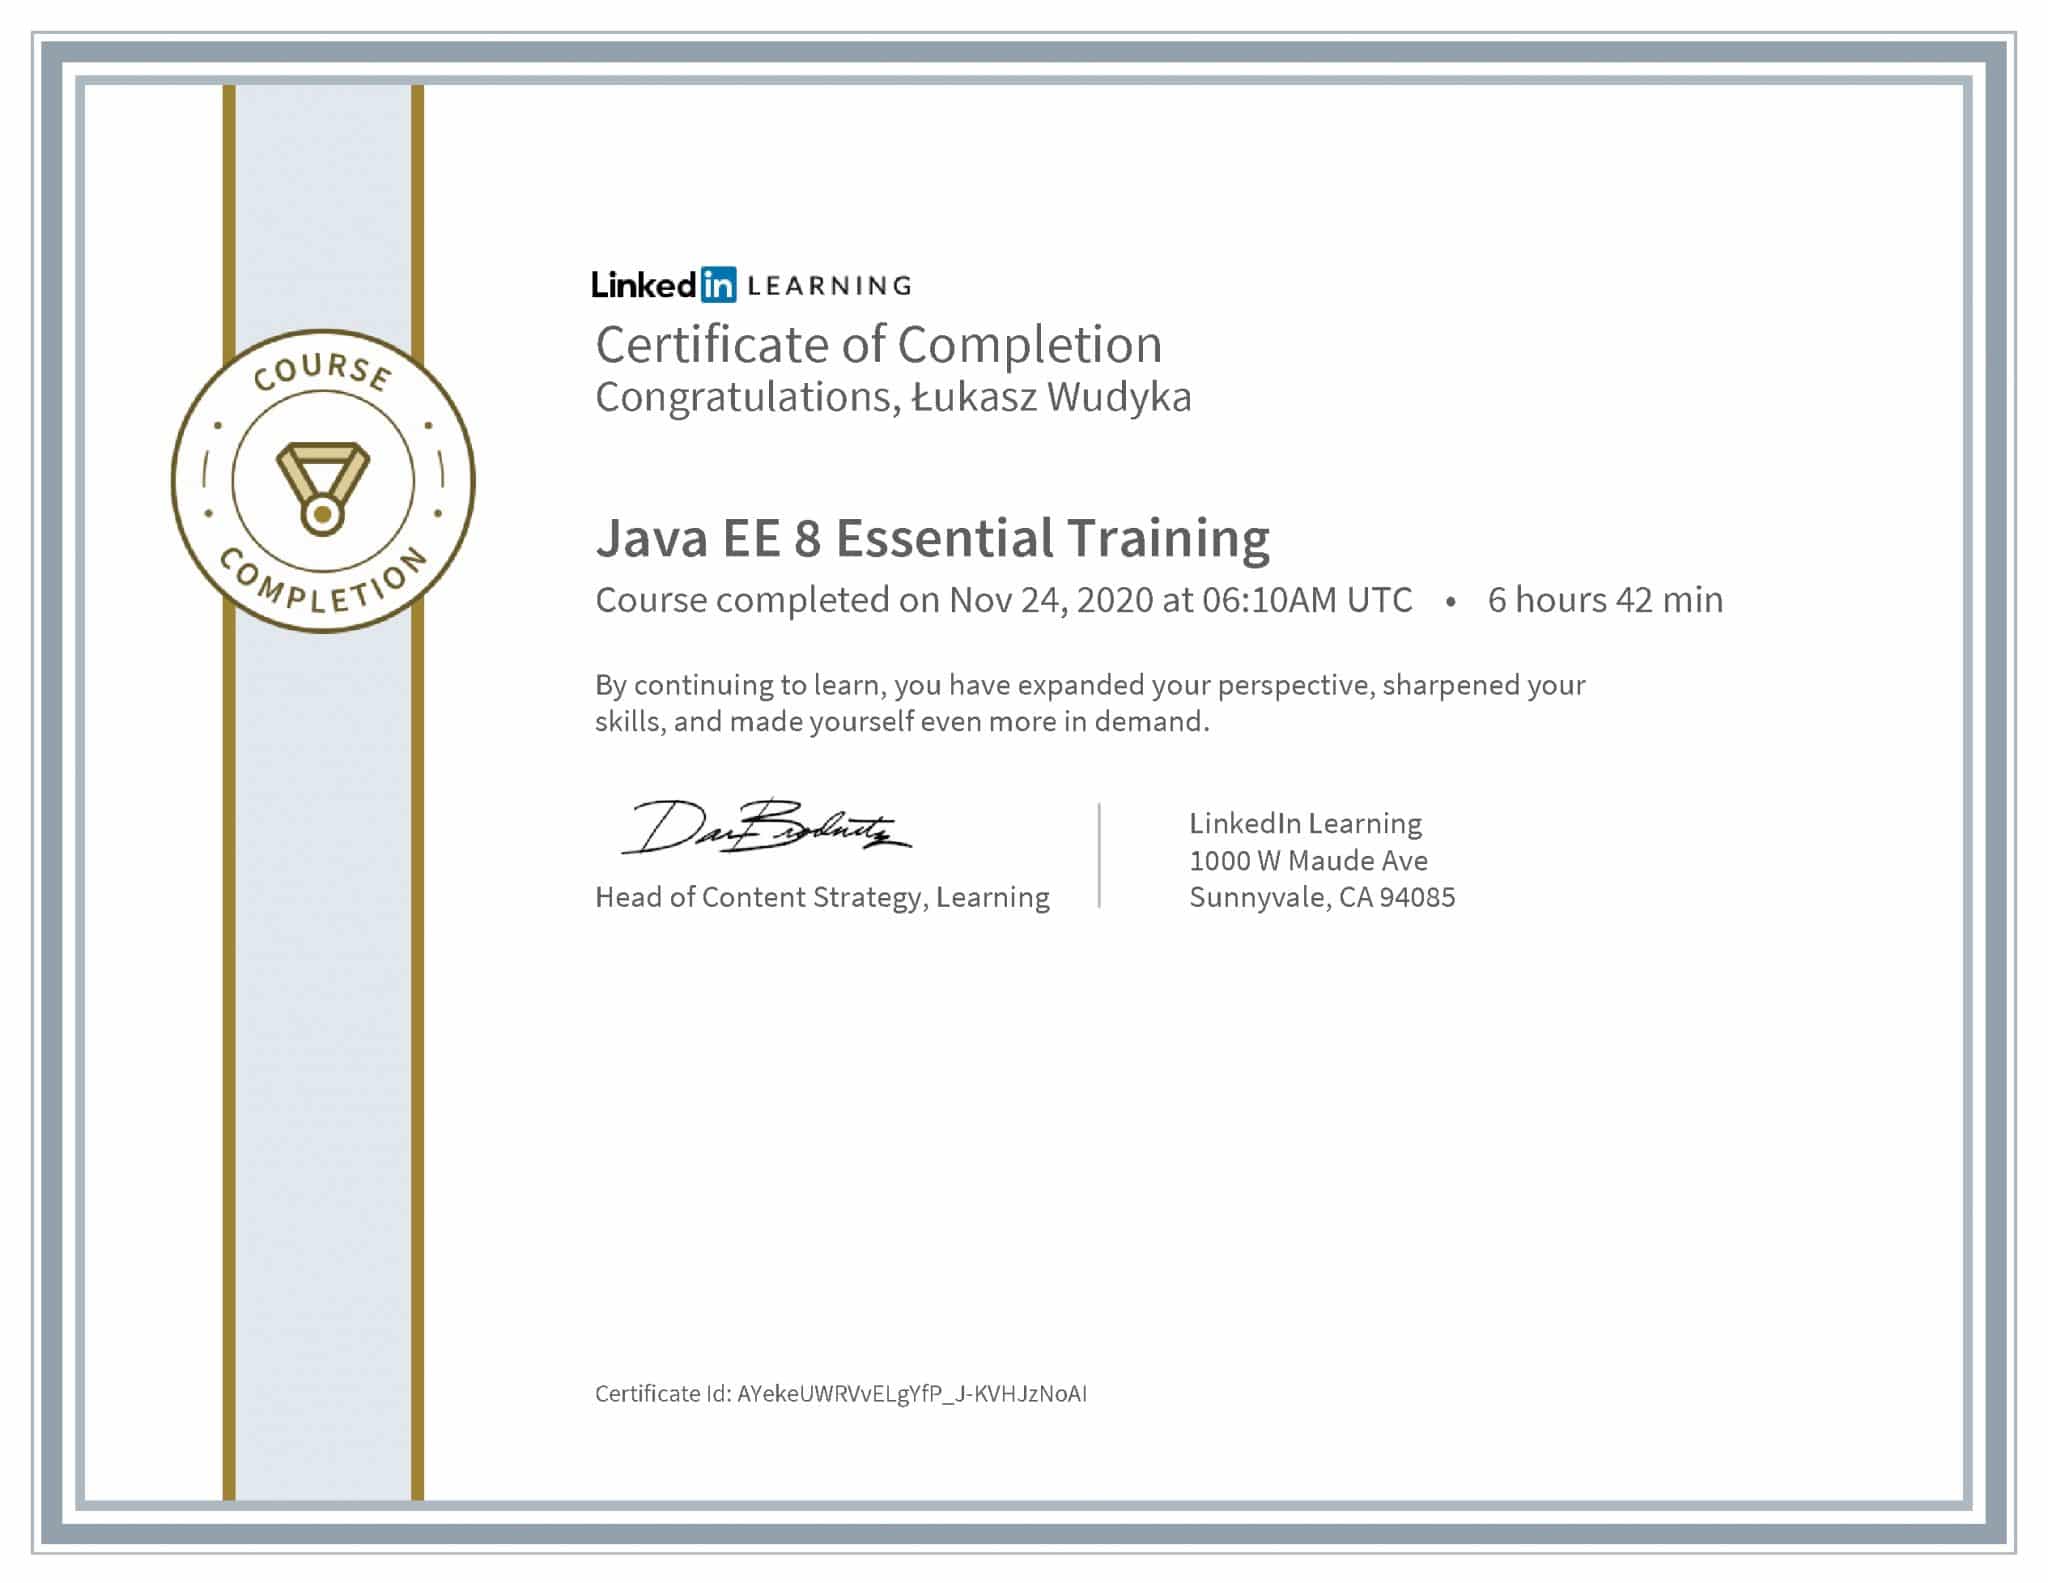 Łukasz Wudyka certyfikat LinkedIn Java EE 8 Essential Training